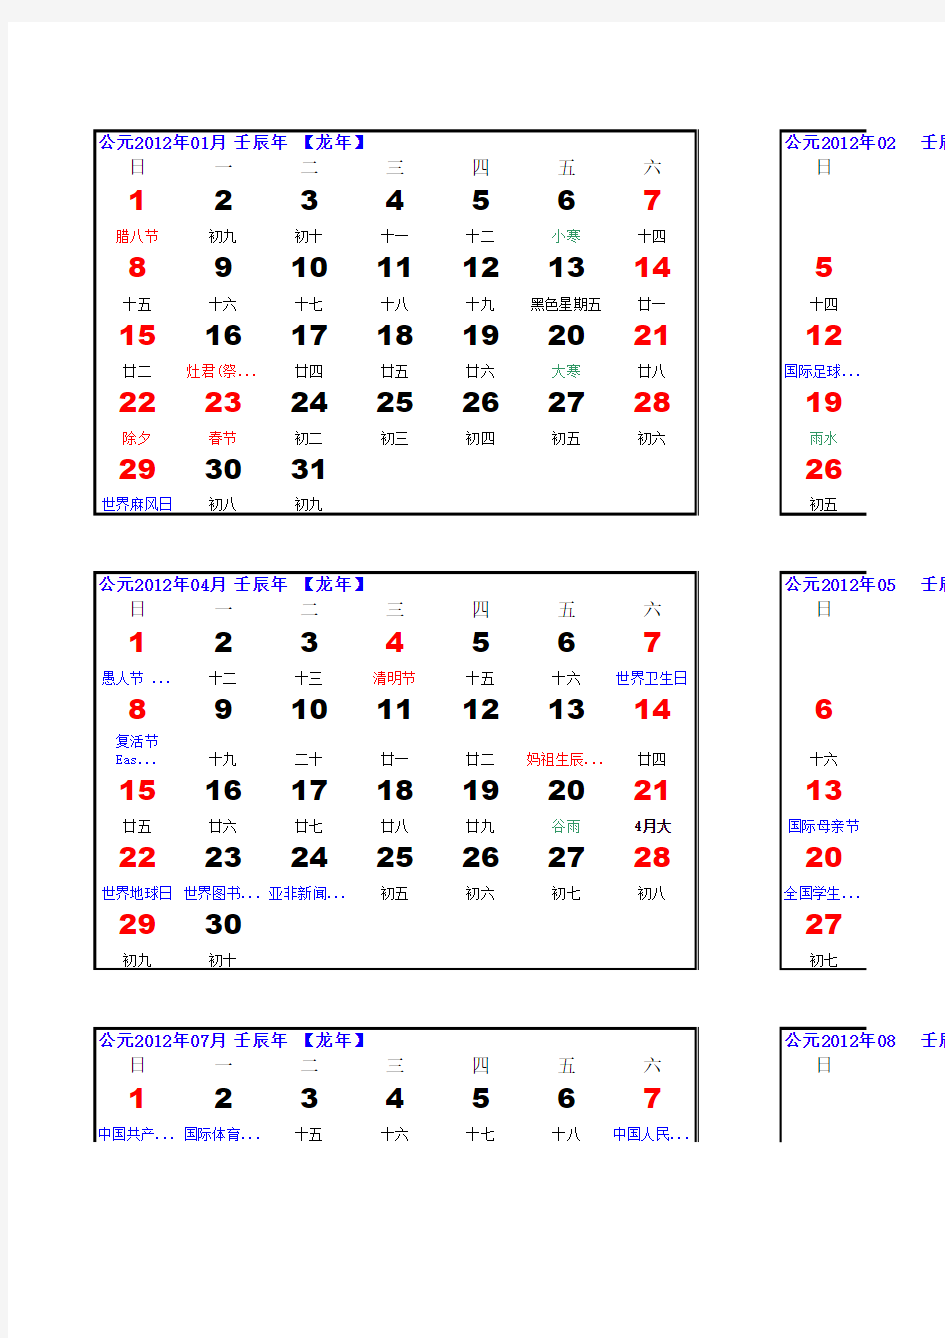 A4打印版2012年日历表最新的(excel2003版)